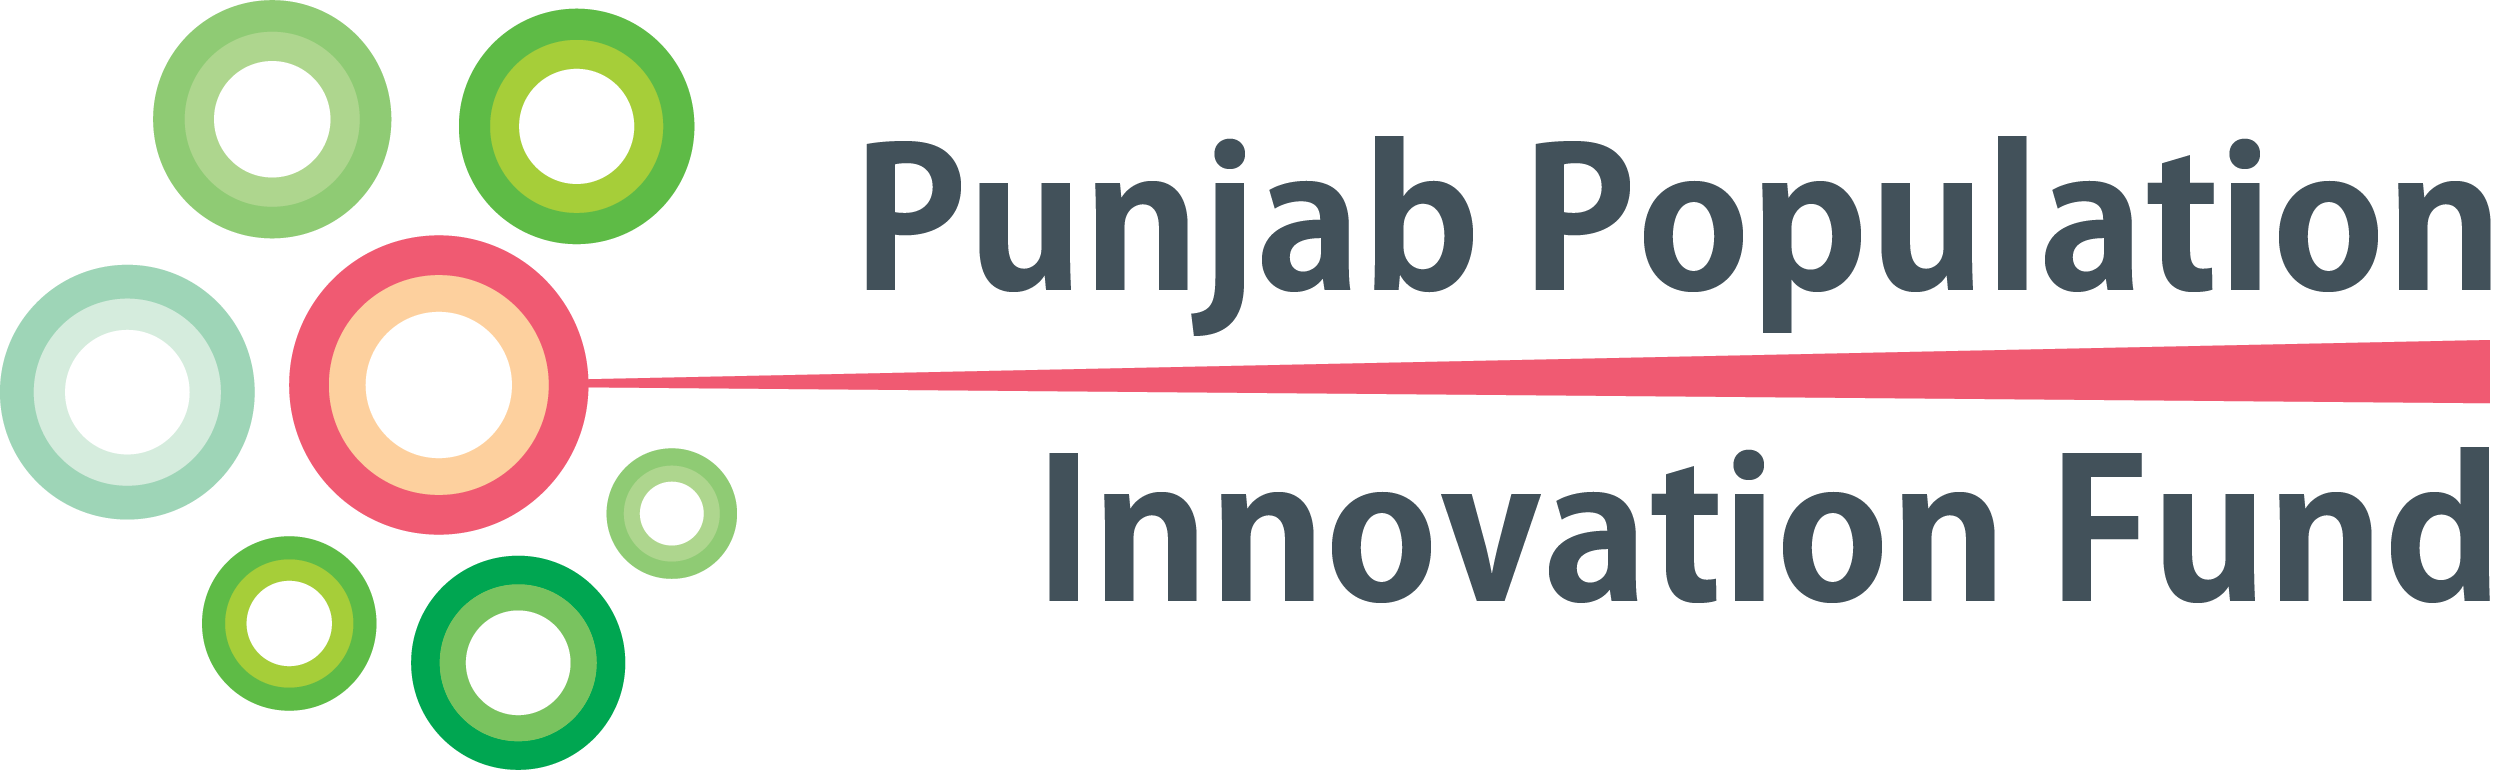 Punjab Population Innovation Fund (PPIF)